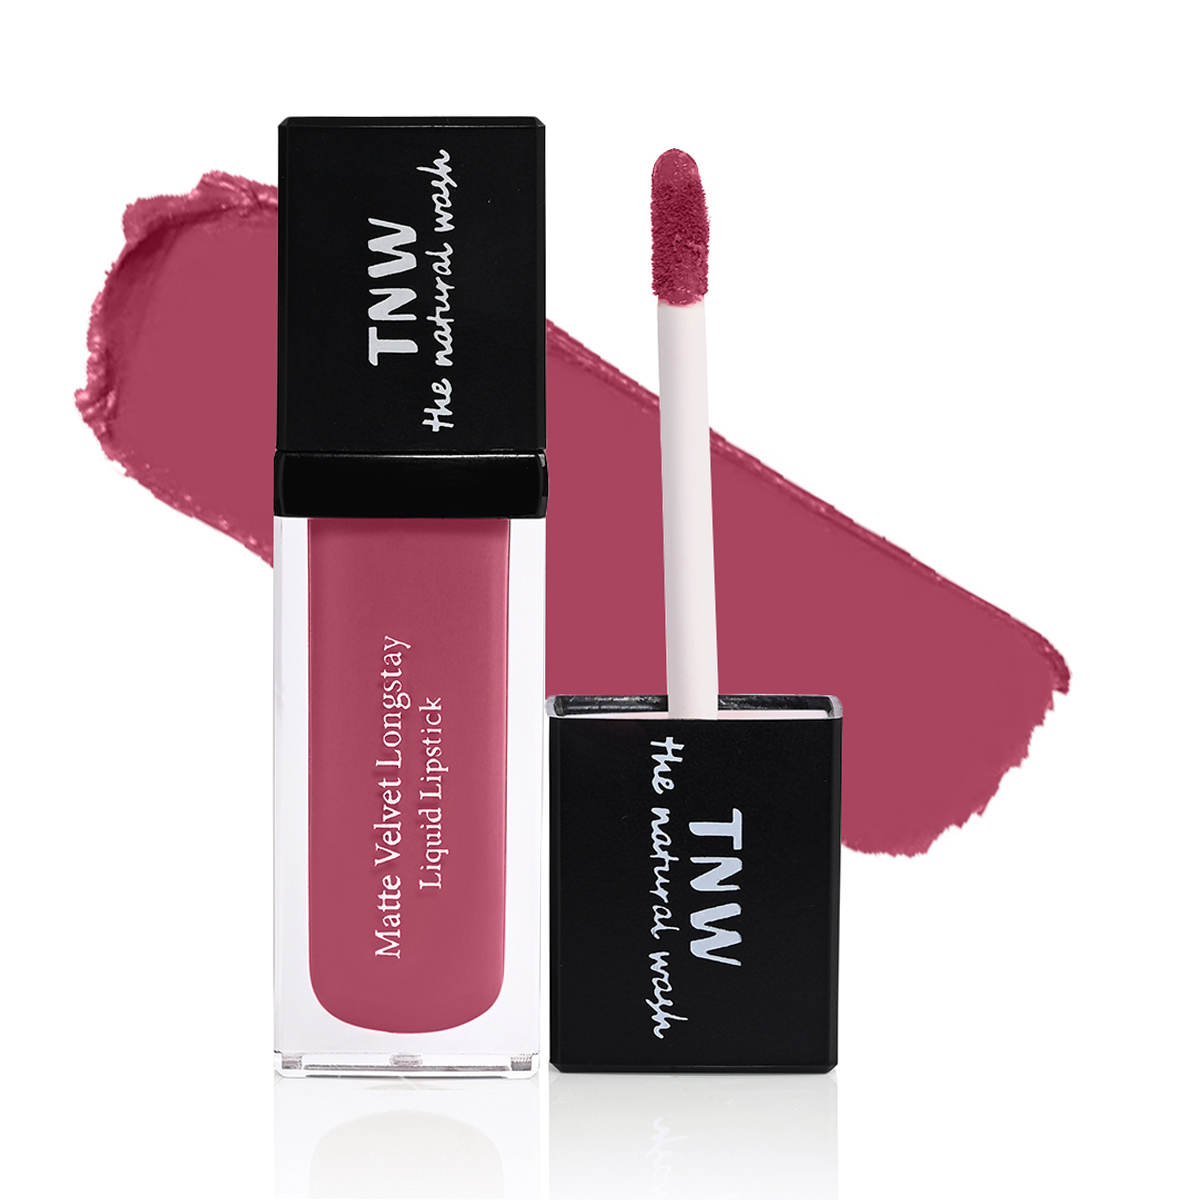 TNW - The Natural Wash Matte Velvet Longstay Liquid Lipstick, 07 - Berry Much - Deep Berry, 5ml